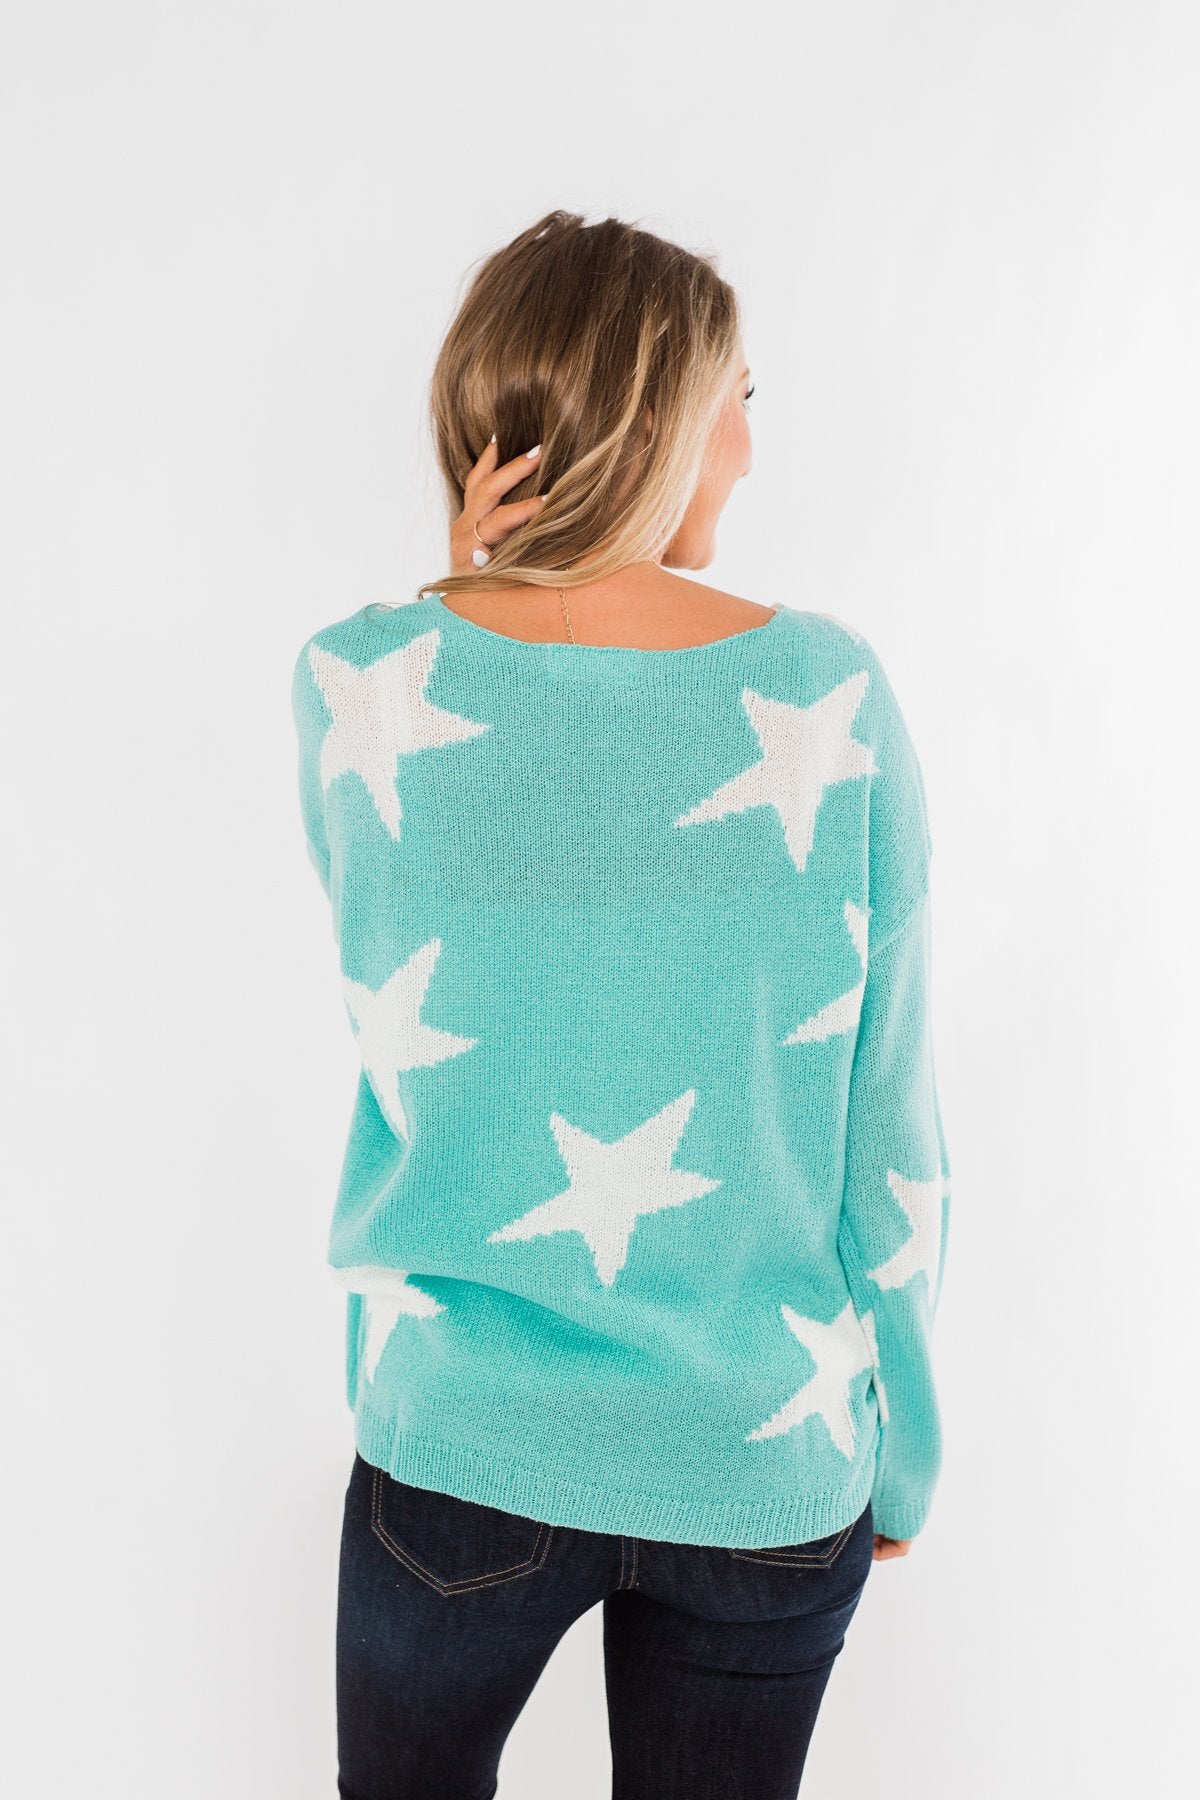 Wishing On A Star Knitted Sweater- Aqua Blue